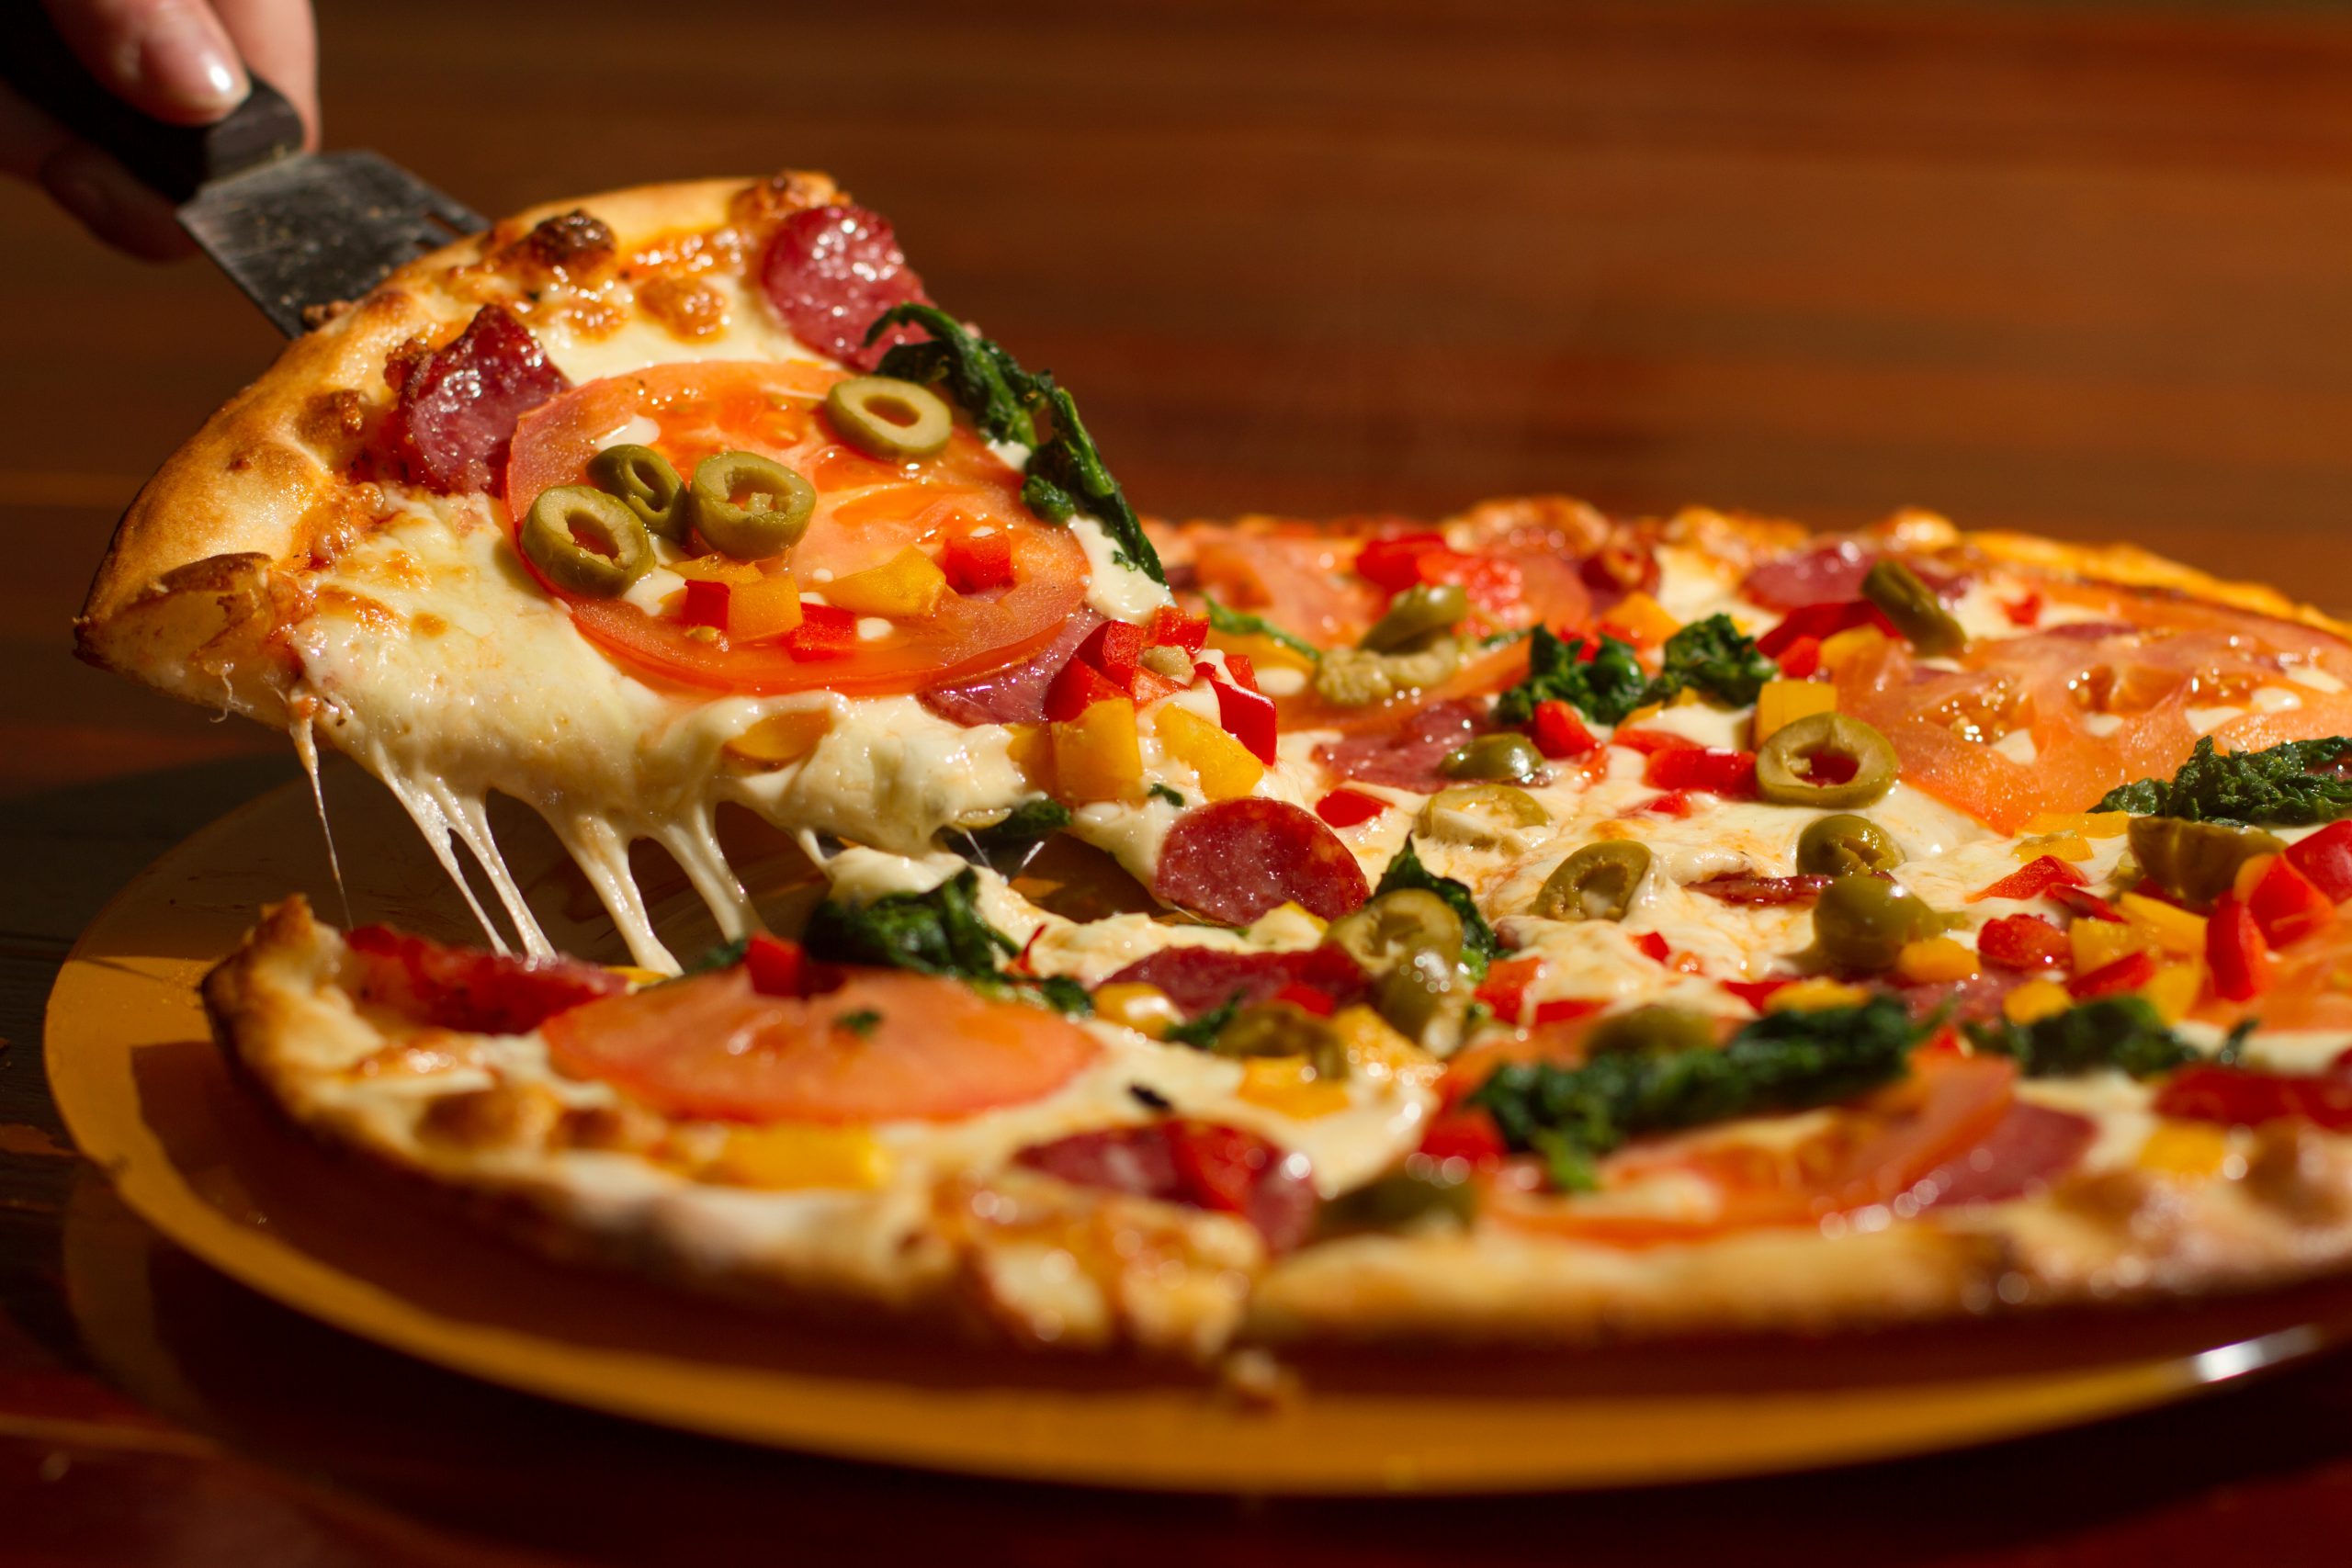 https://depositphotos.com/41466555/stock-photo-image-of-slice-of-pizza.html